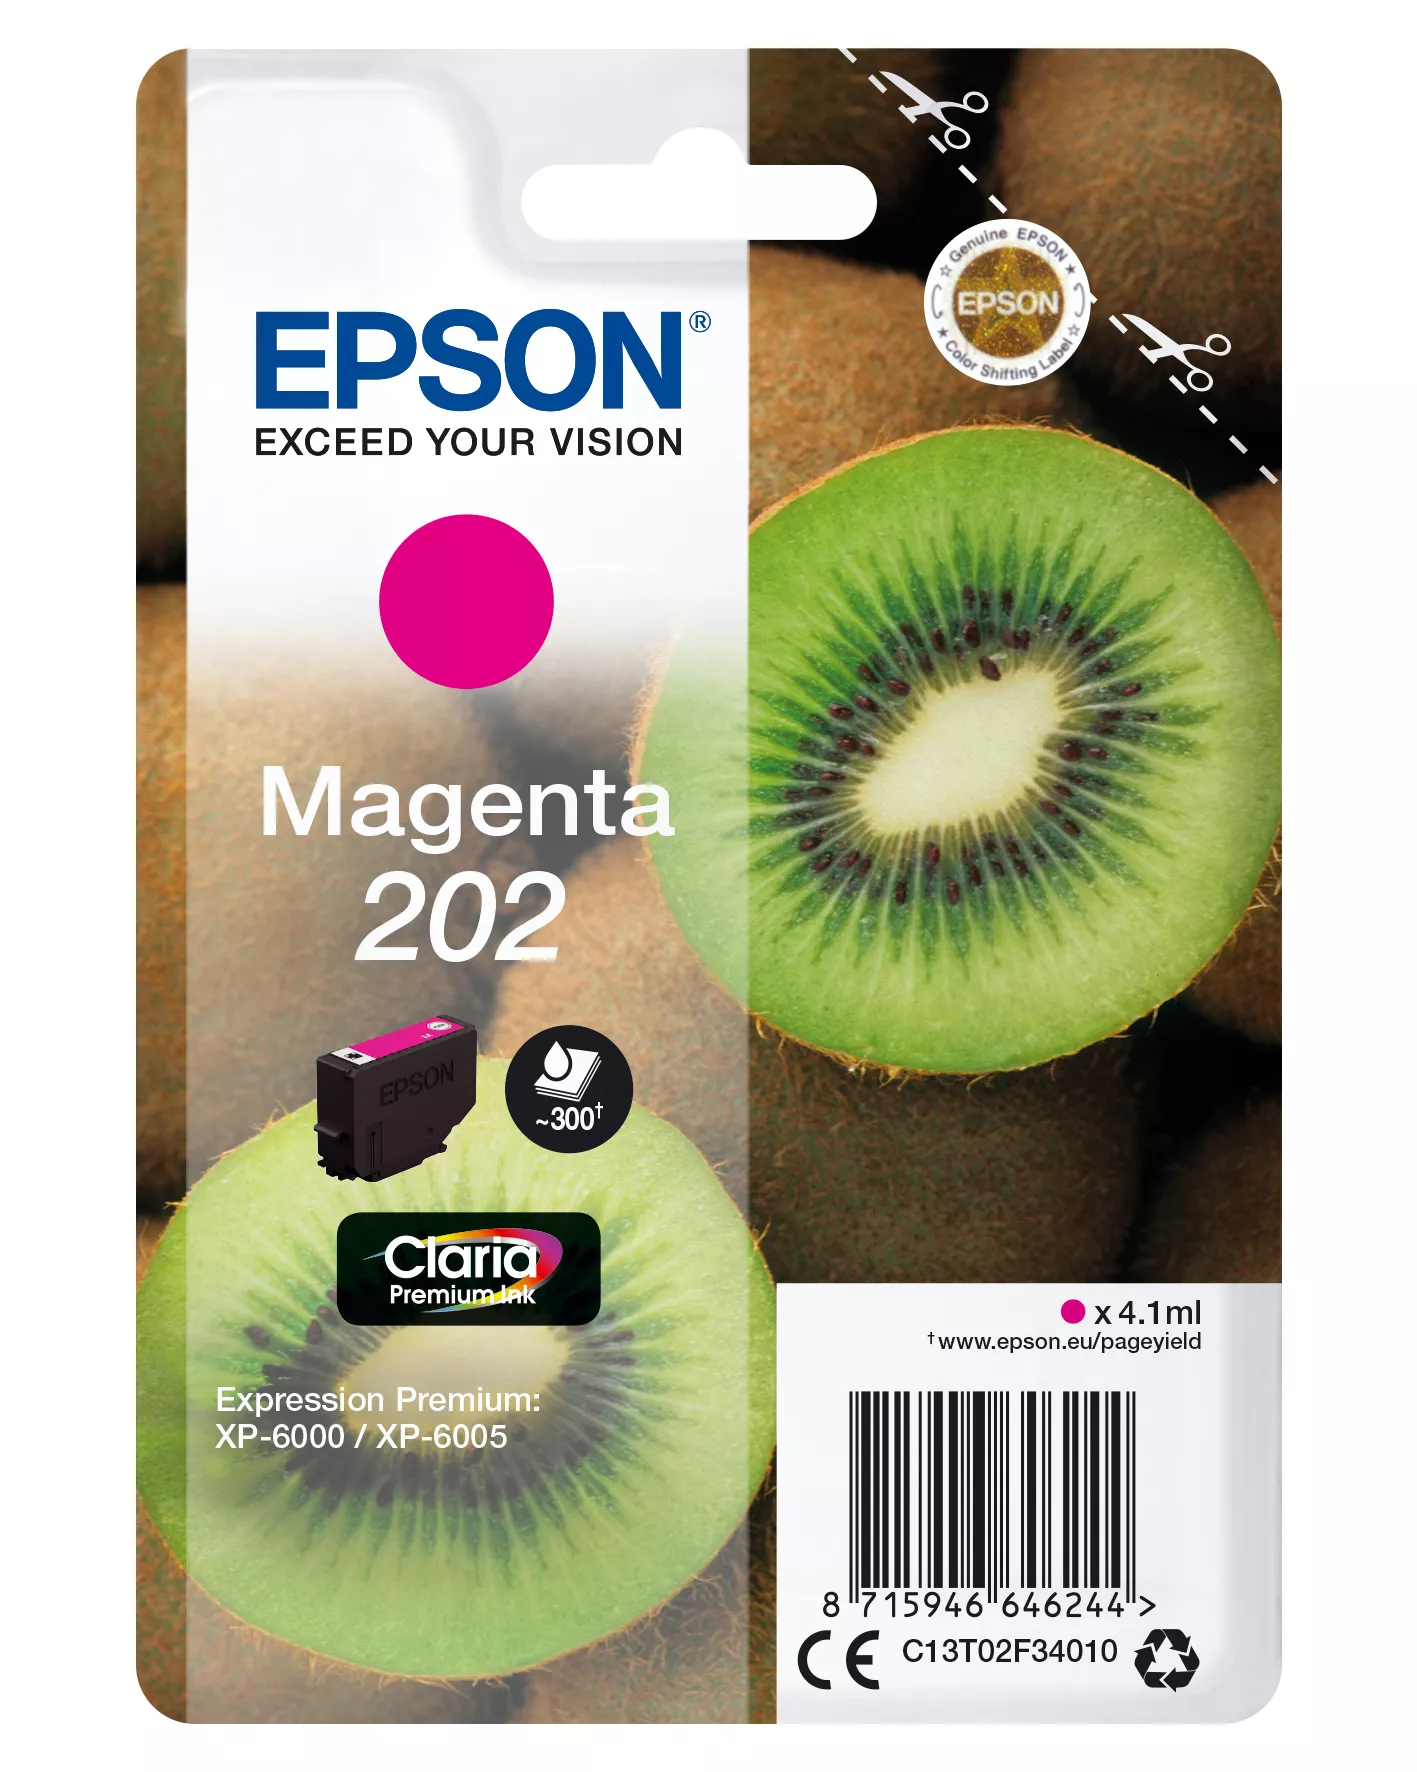 Achat Cartouches d'encre Epson Kiwi Singlepack Magenta 202 Claria Premium Ink